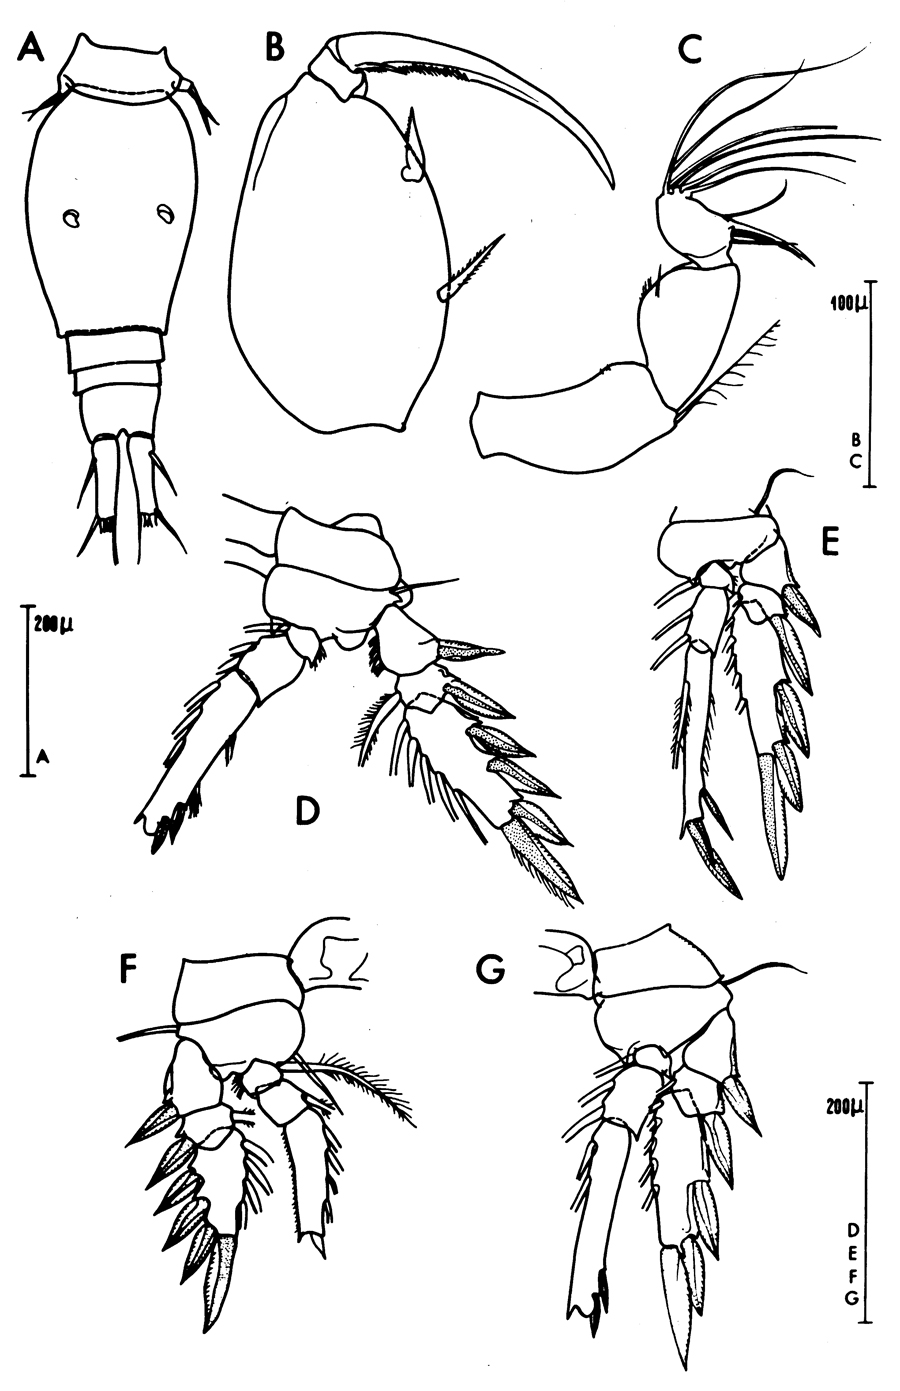 Species Oncaea mediterranea - Plate 21 of morphological figures